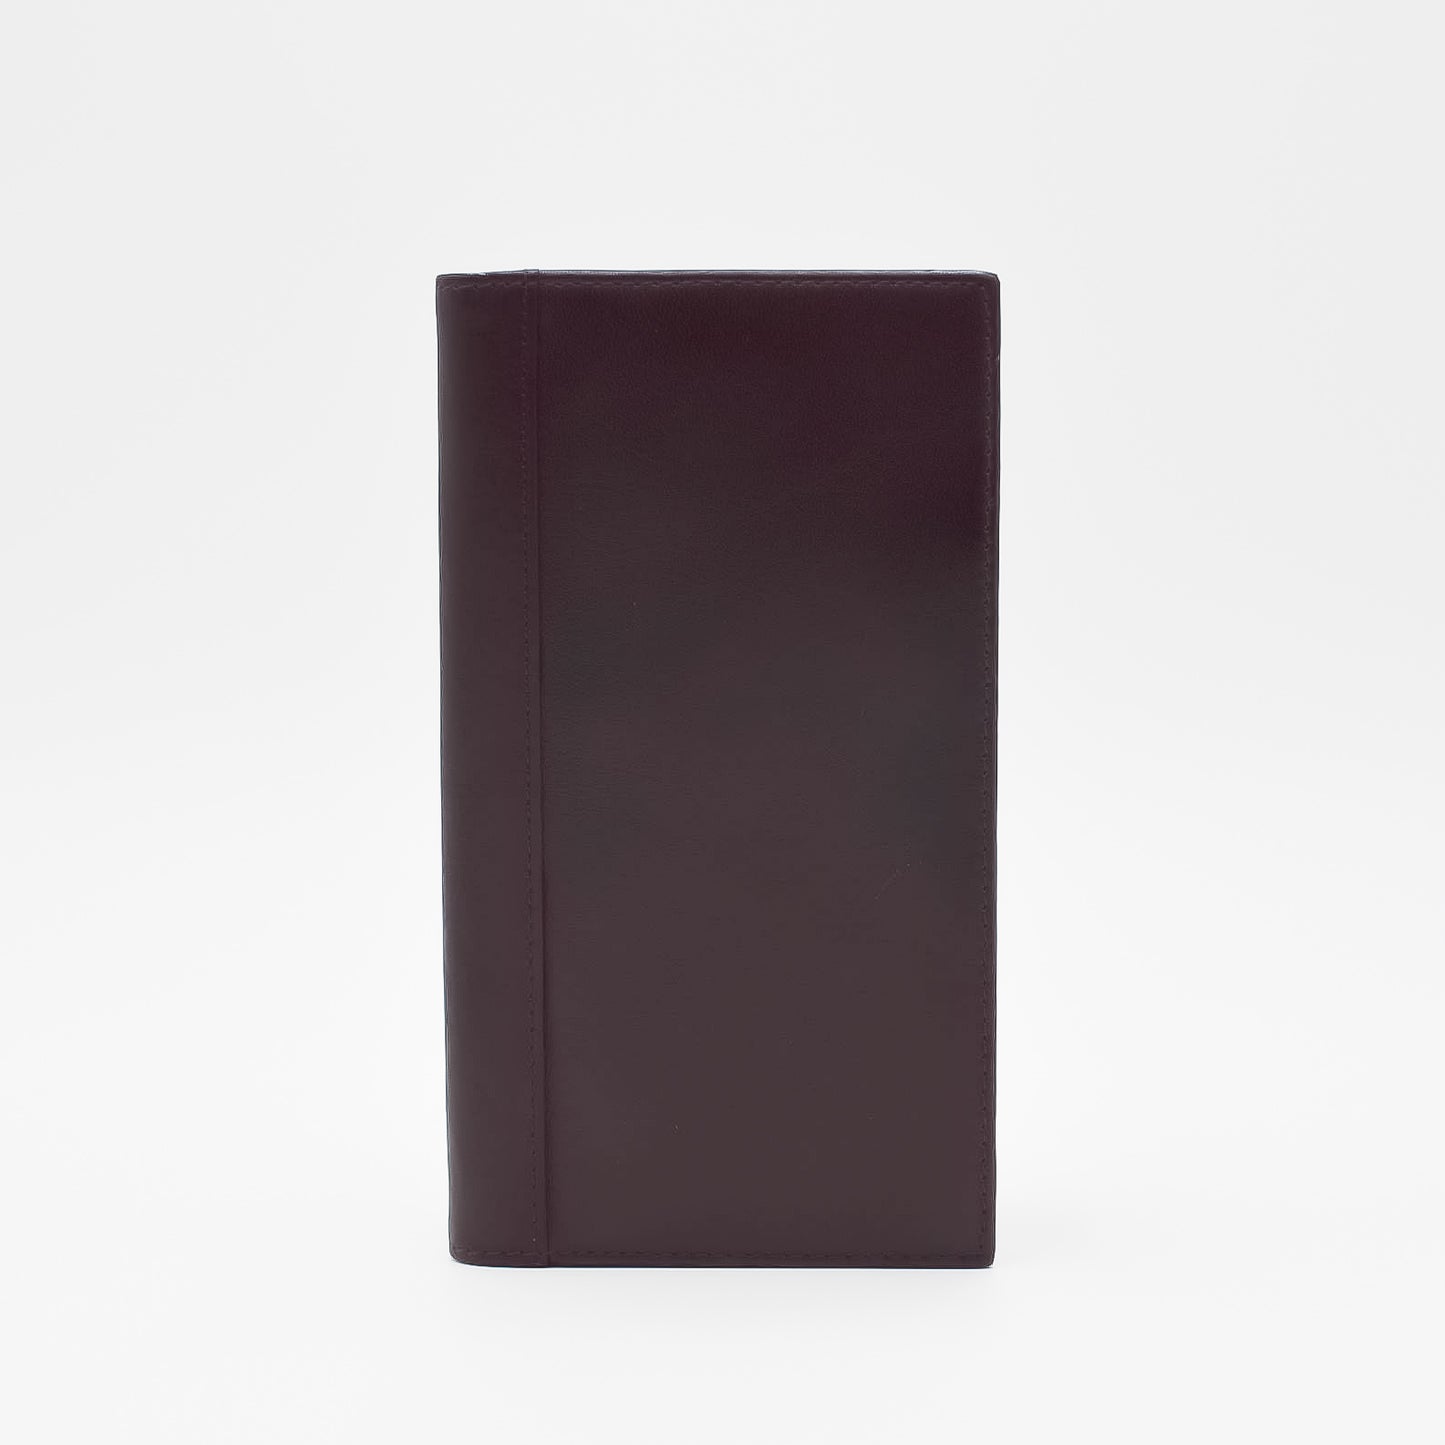 Leather Cover: 391 6 3/4" x 3 3/4" for 3-1/4x6-1/4 wirebound or casebound insert burgundy